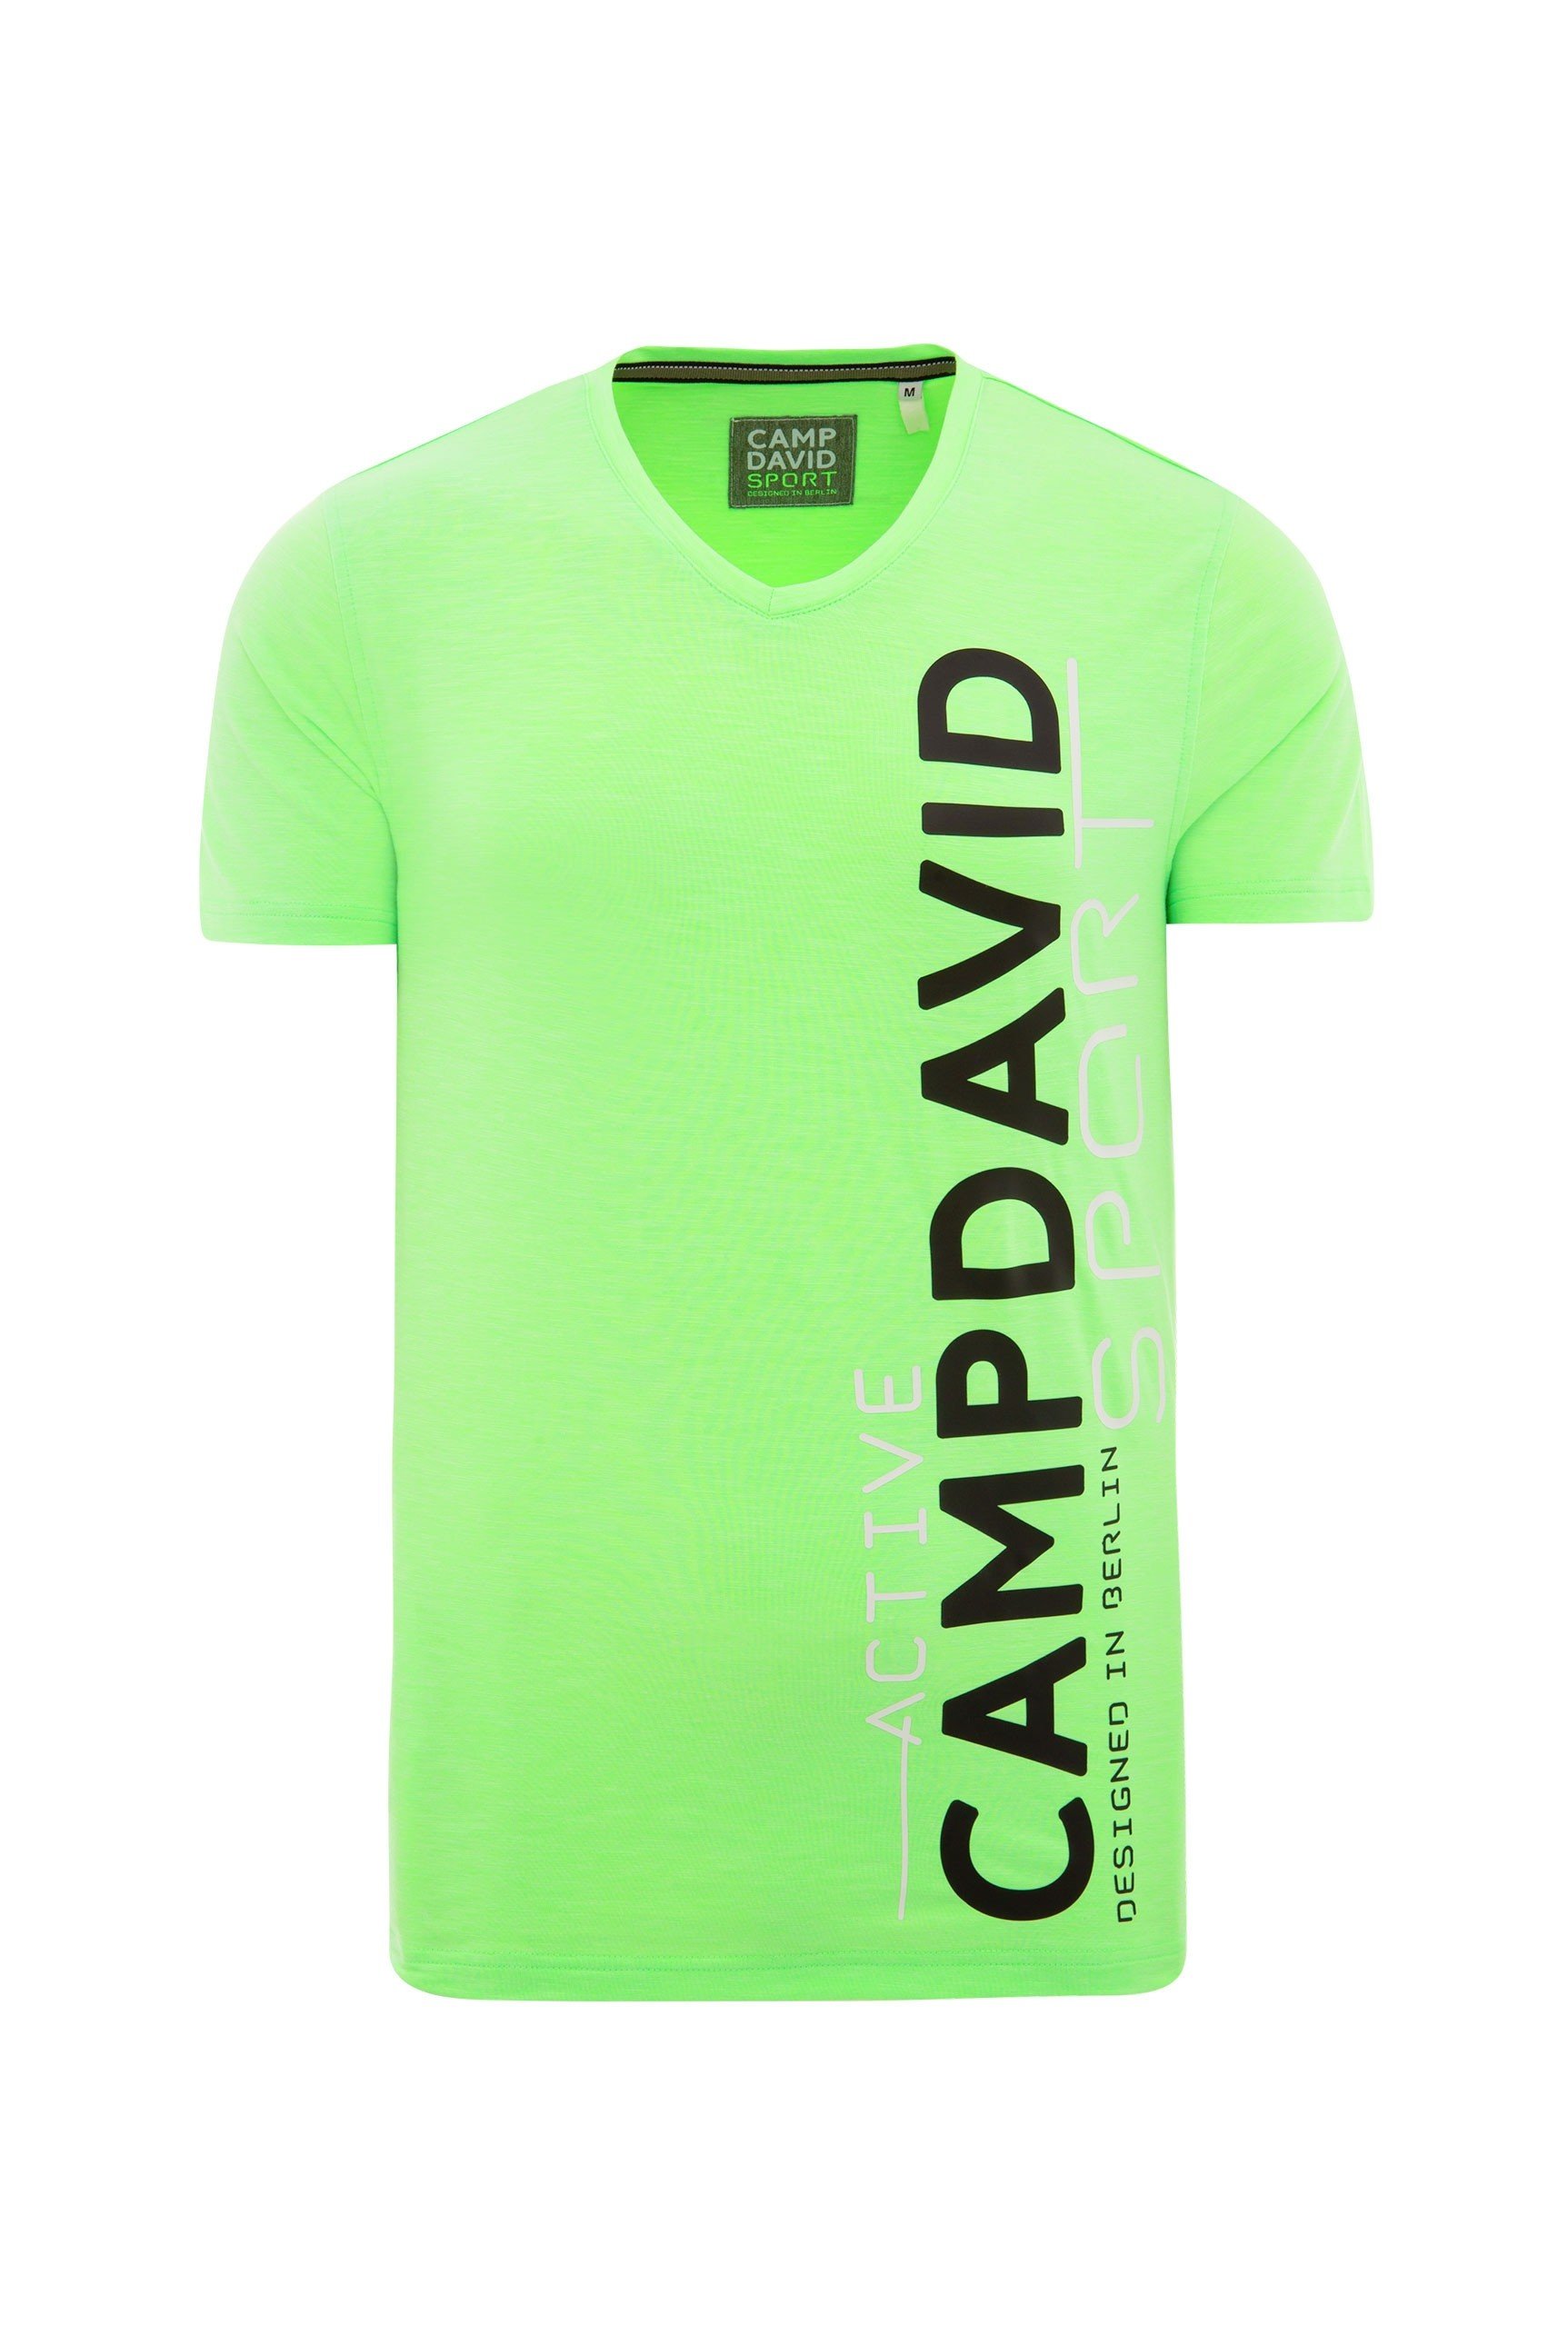 Image of Camp David T-Shirt CAD Sport Herren - signal green